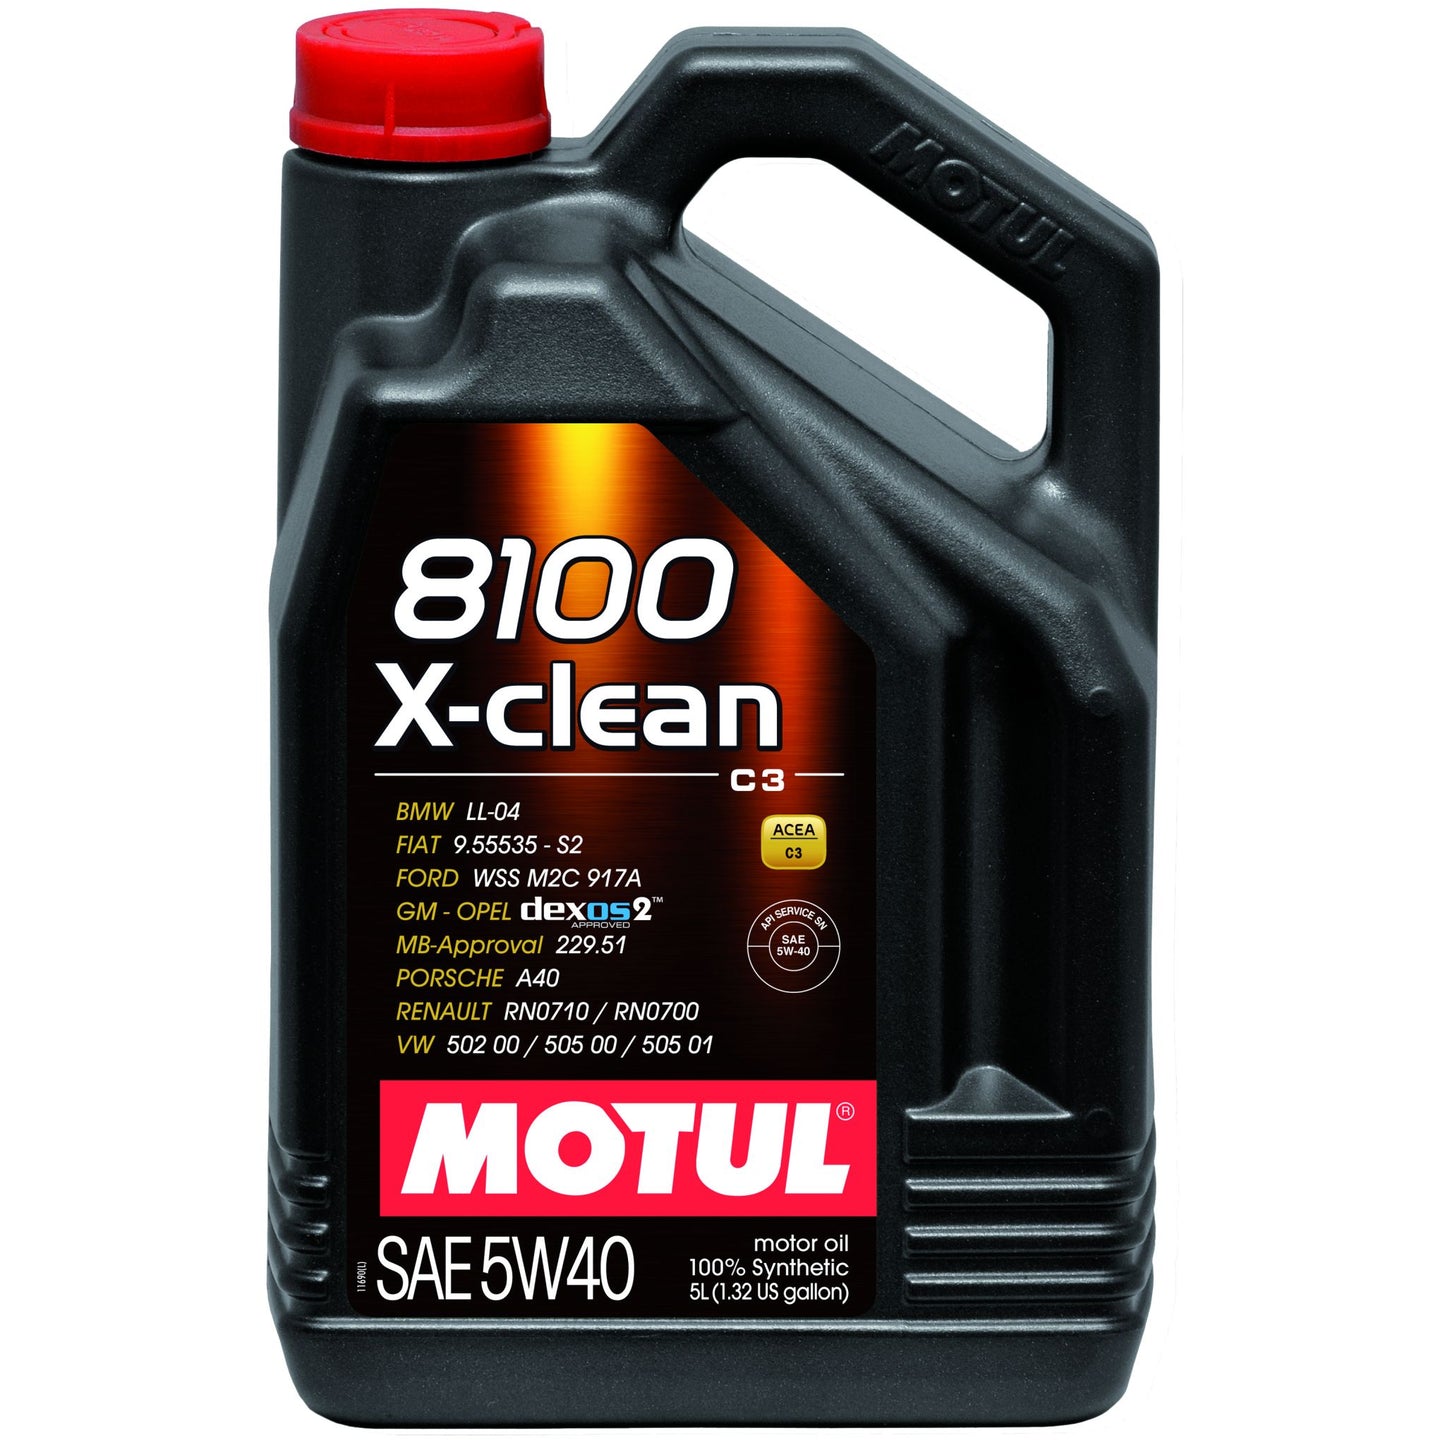 Motul 8100 X-CLEAN 5W40 - 5L - Synthetic Engine Oil 102051